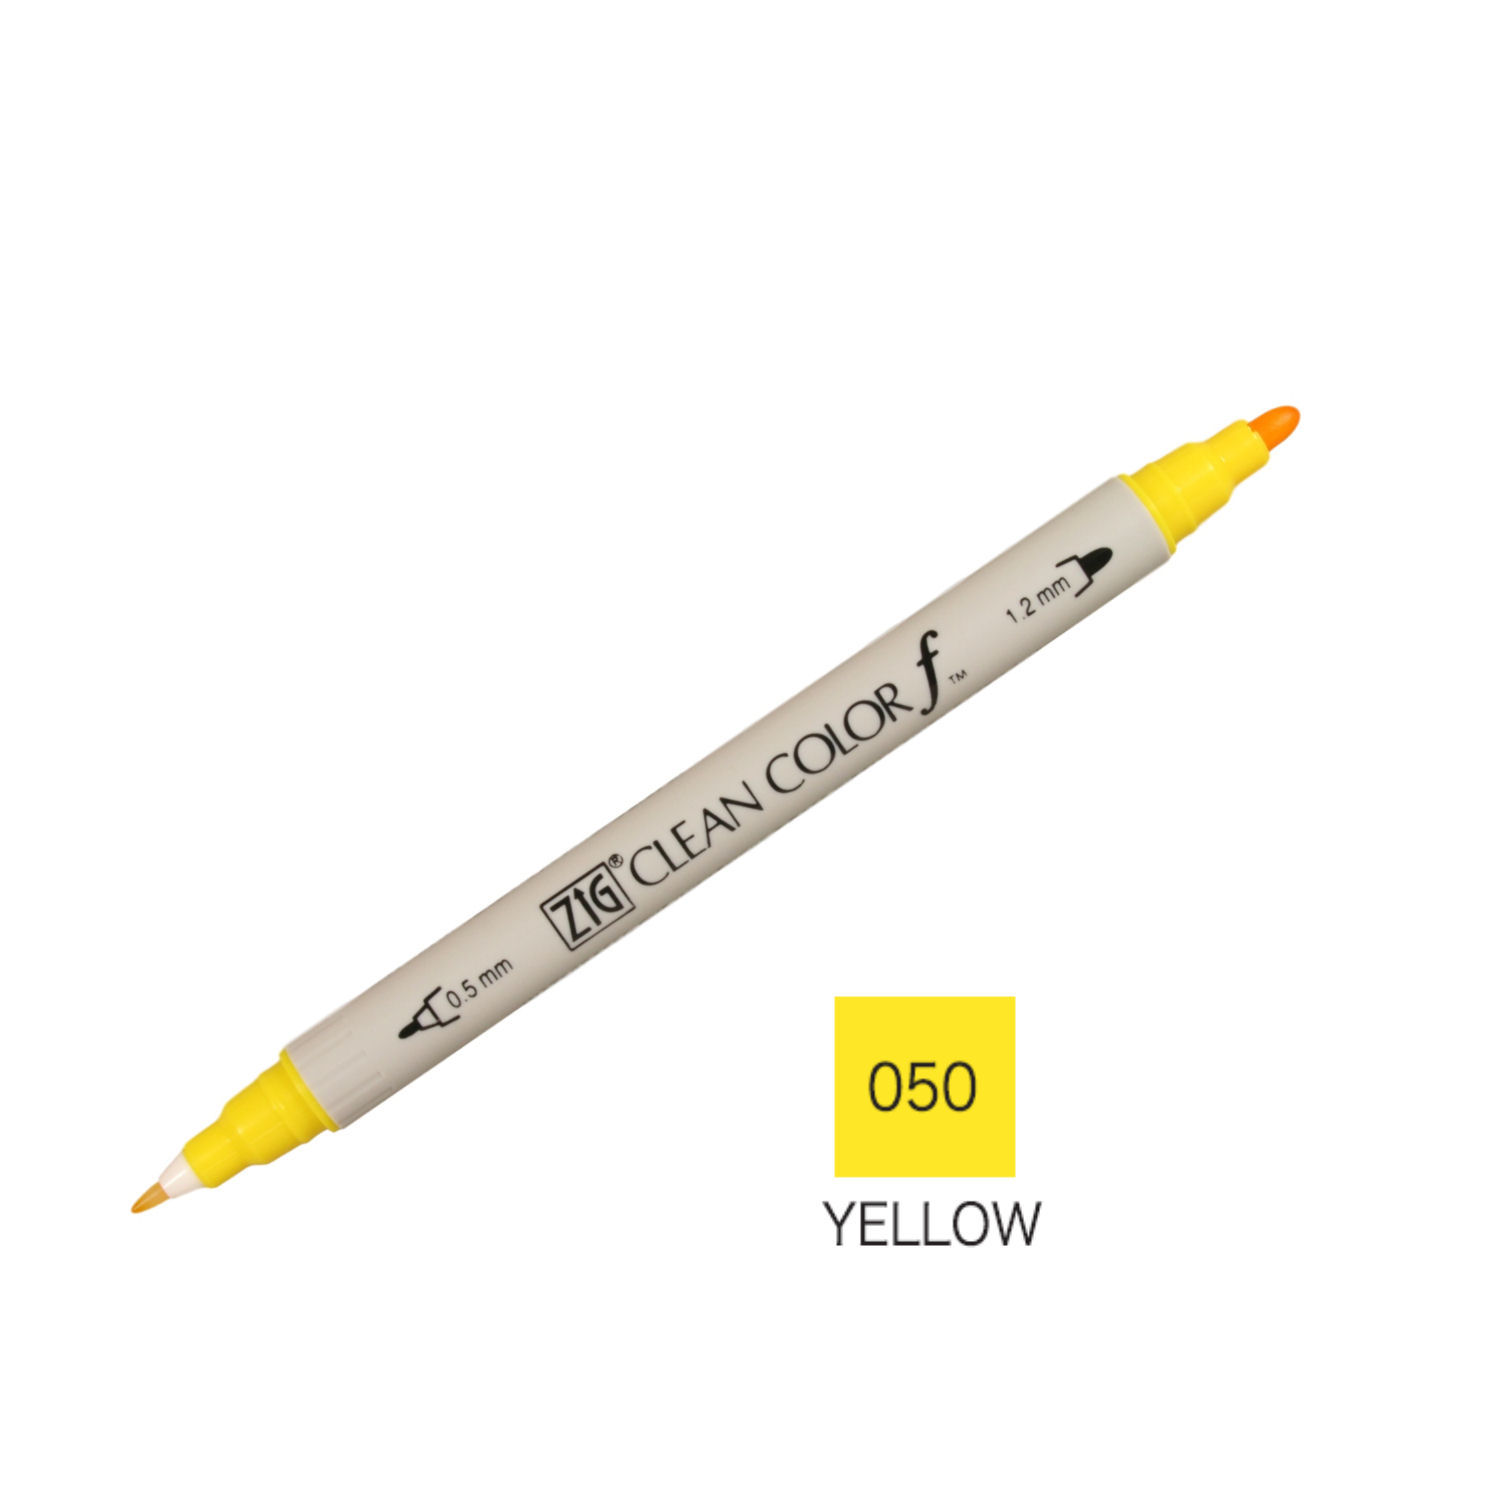 Zig Clean Color - 050 Yellow